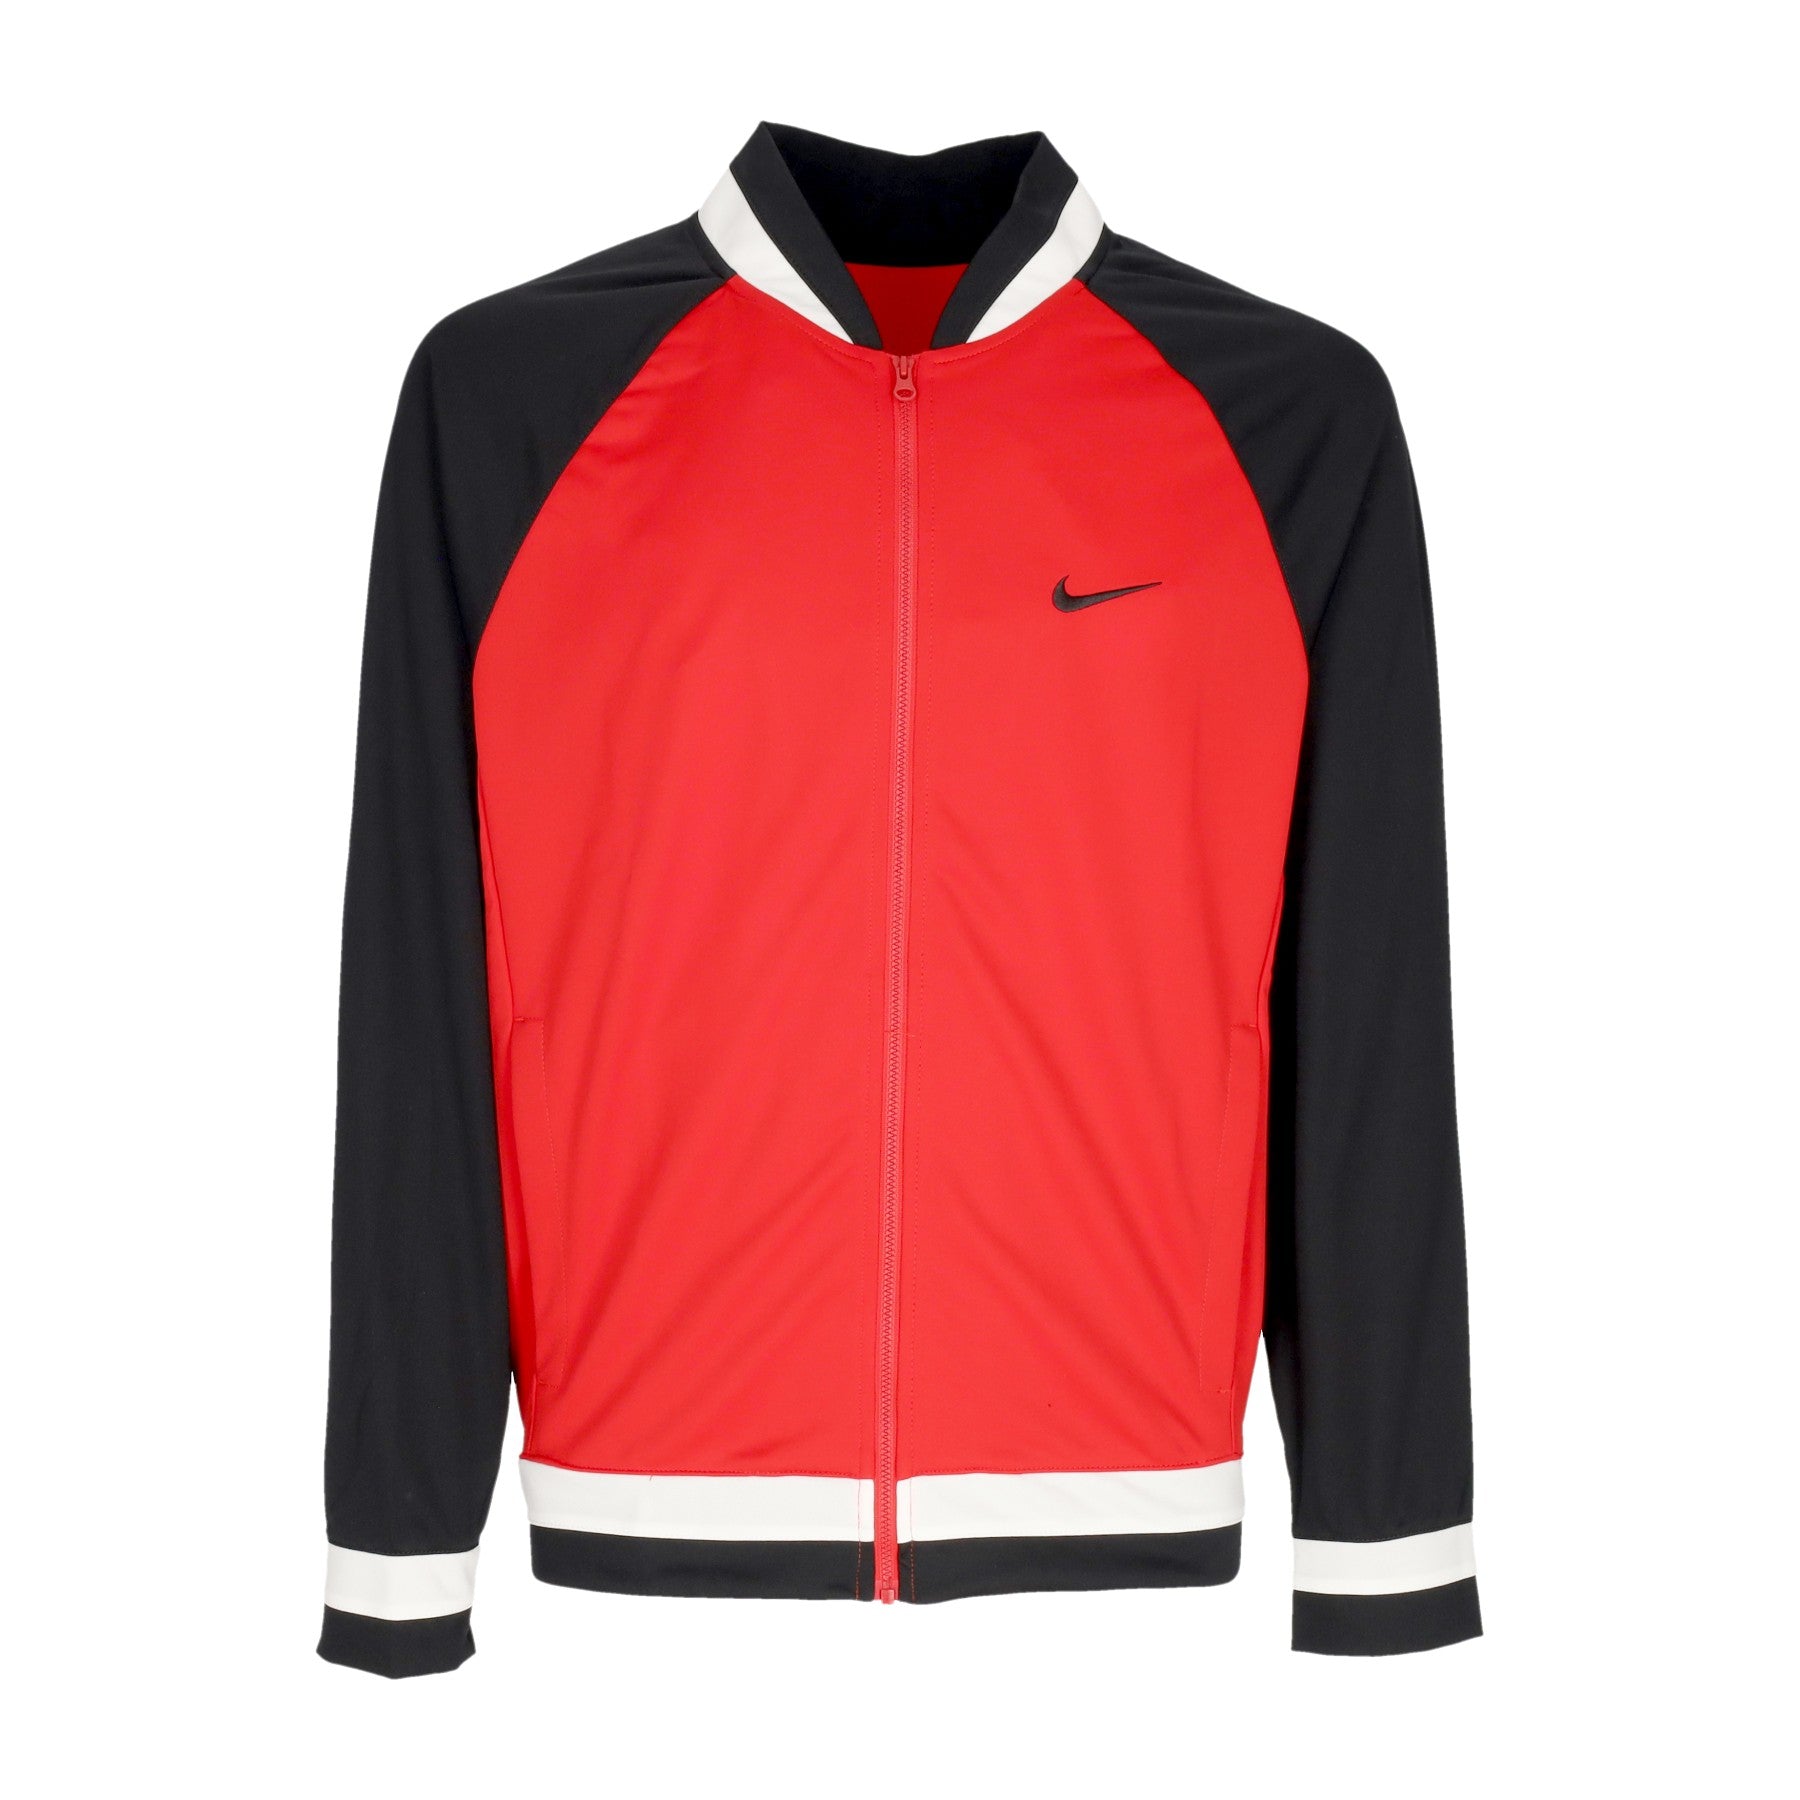 Nike, Giacca Tuta Uomo Starting Five Dri-fit Jacket, University Red/black/white/black